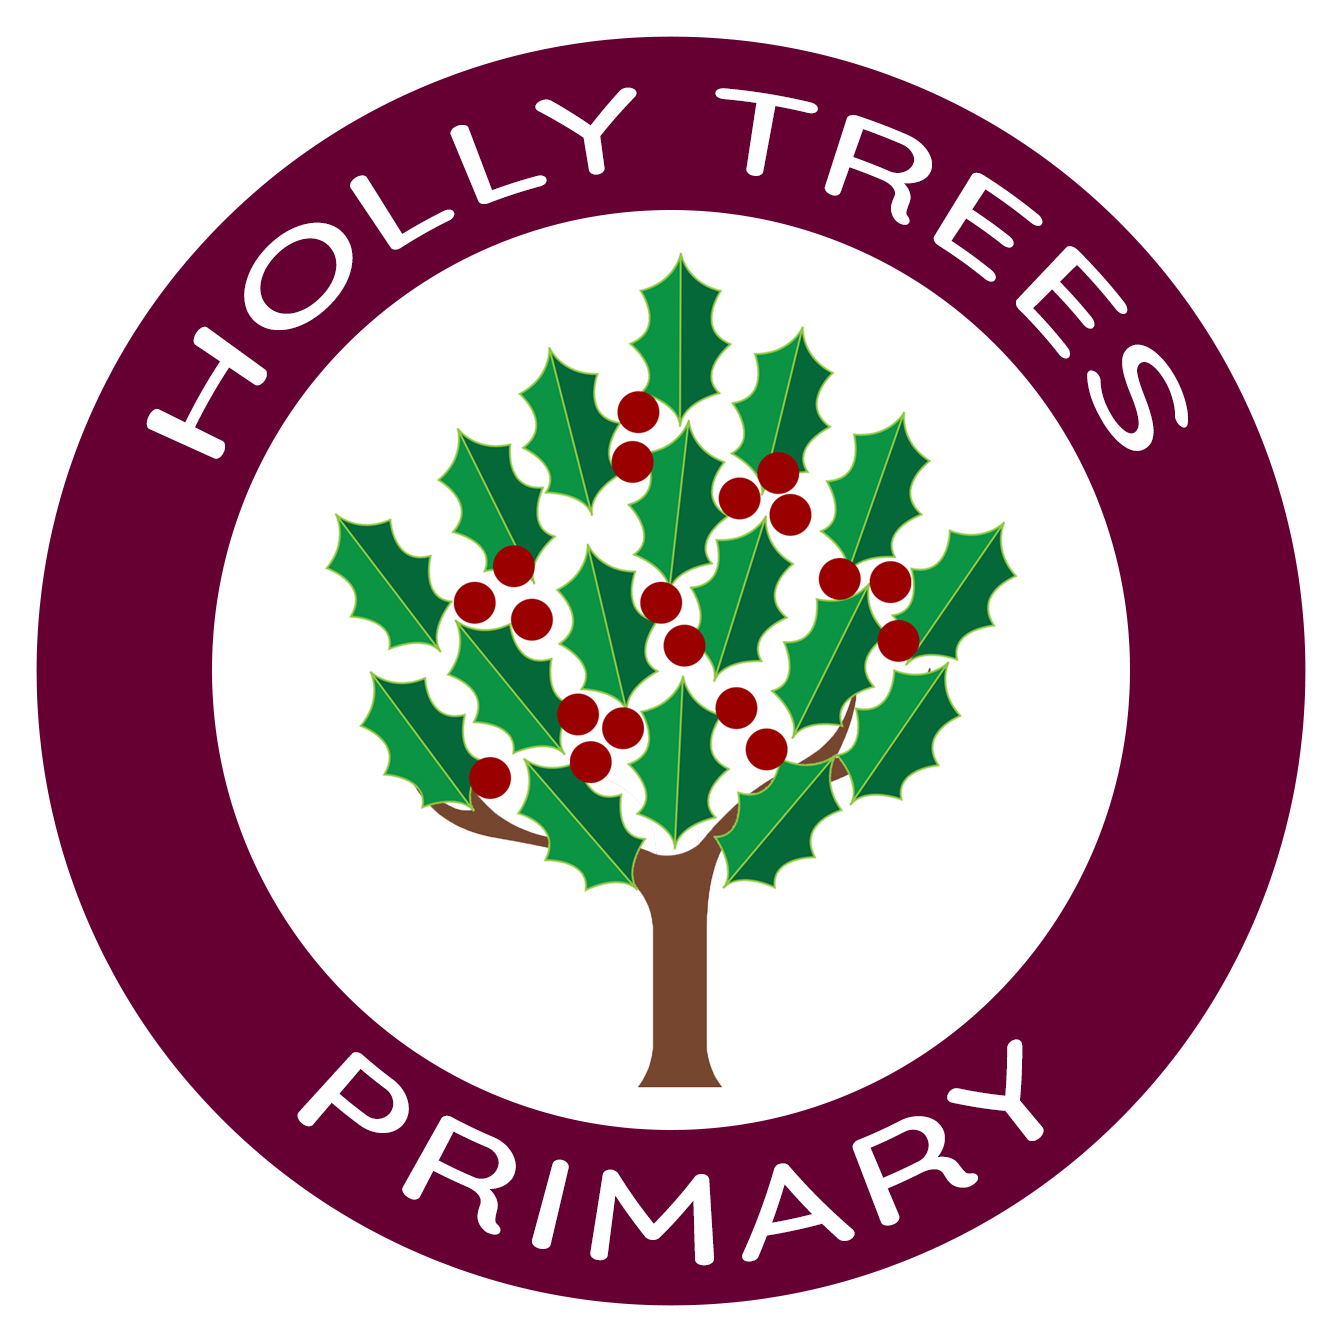 Holly Trees Primary School Logo.jpg